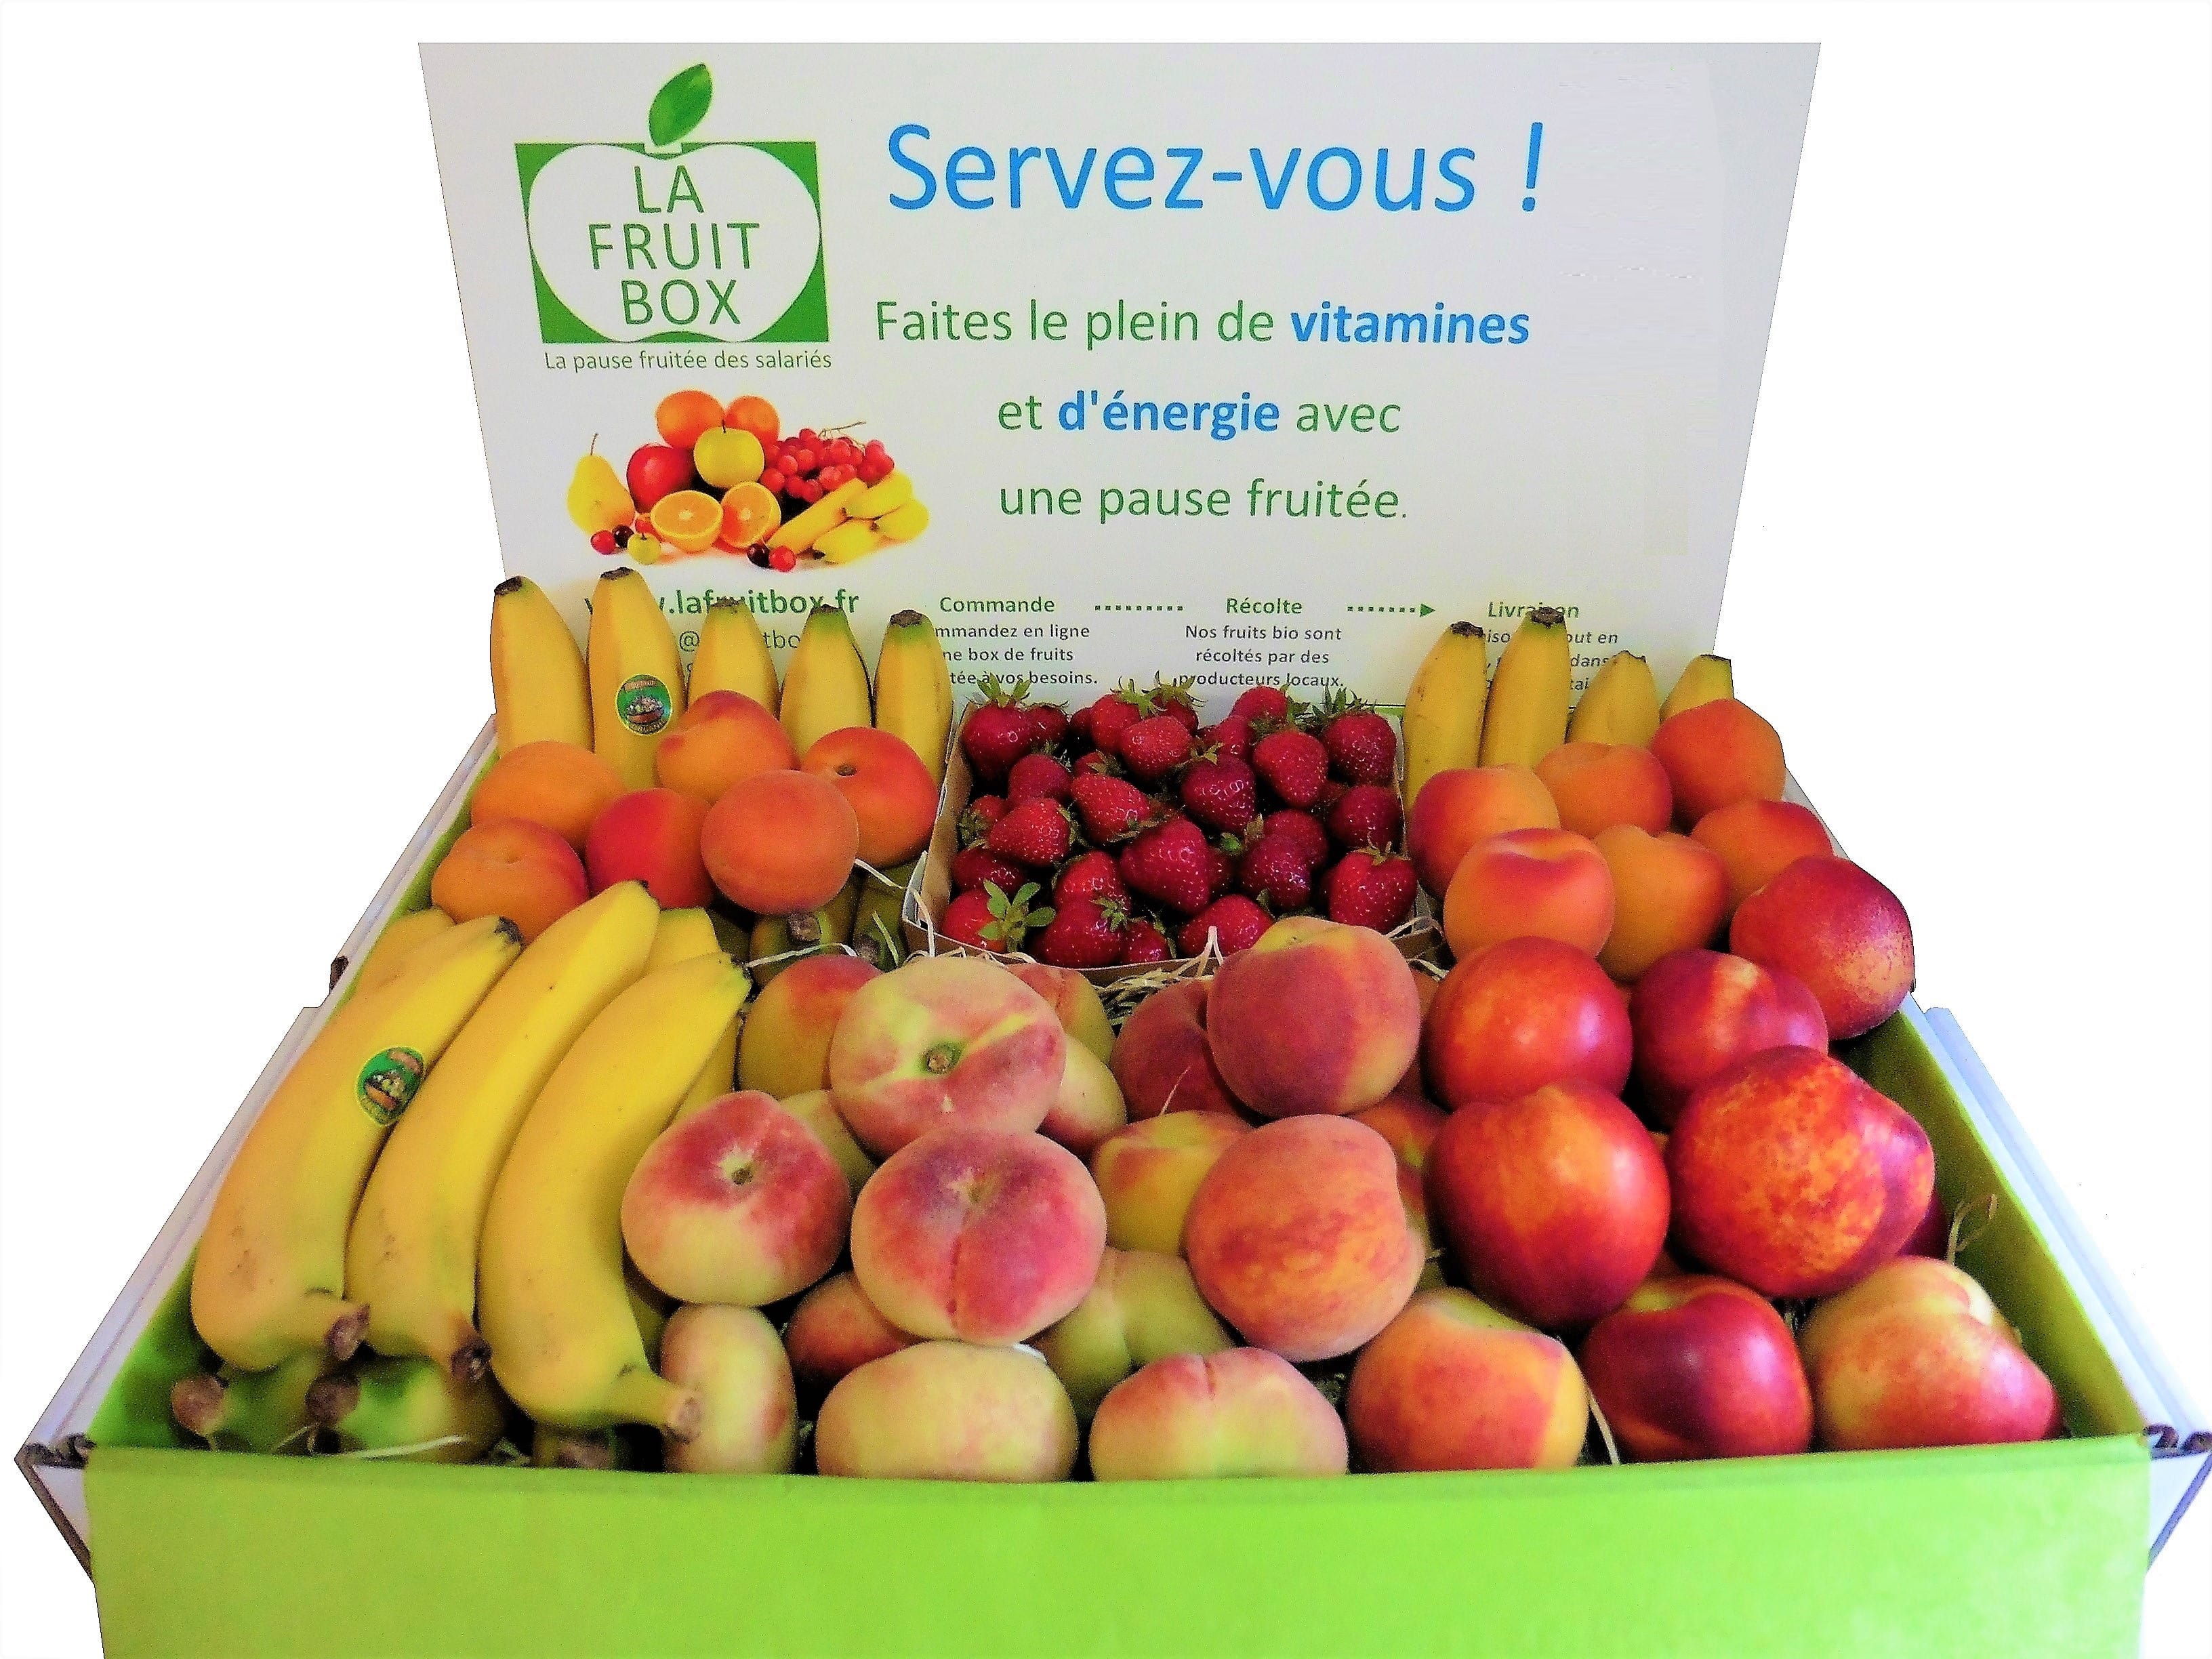 grande box 7kg fruits bio locaux lafruitbox nantes